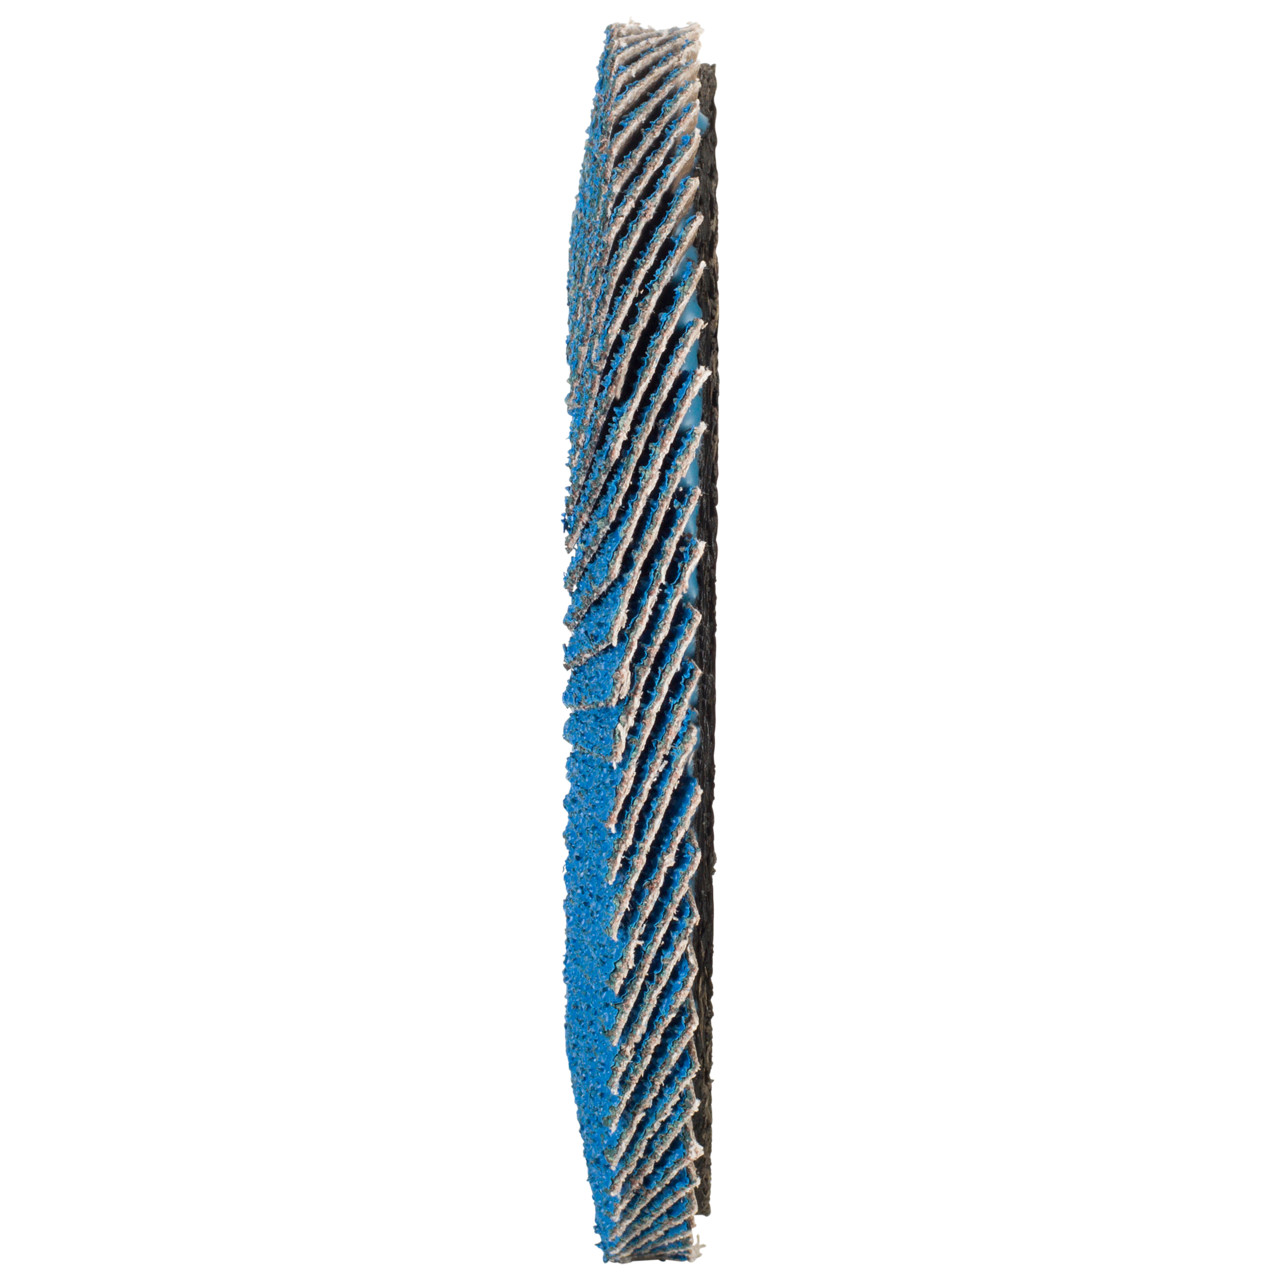 TYROLIT Fächerscheibe DxH 115x22,2 FASTCUT für Stahl & Edelstahl, P60, Form: 27A - gekröpfte Ausführung (Glasfaserträgerkörperausführung), Art. 160230